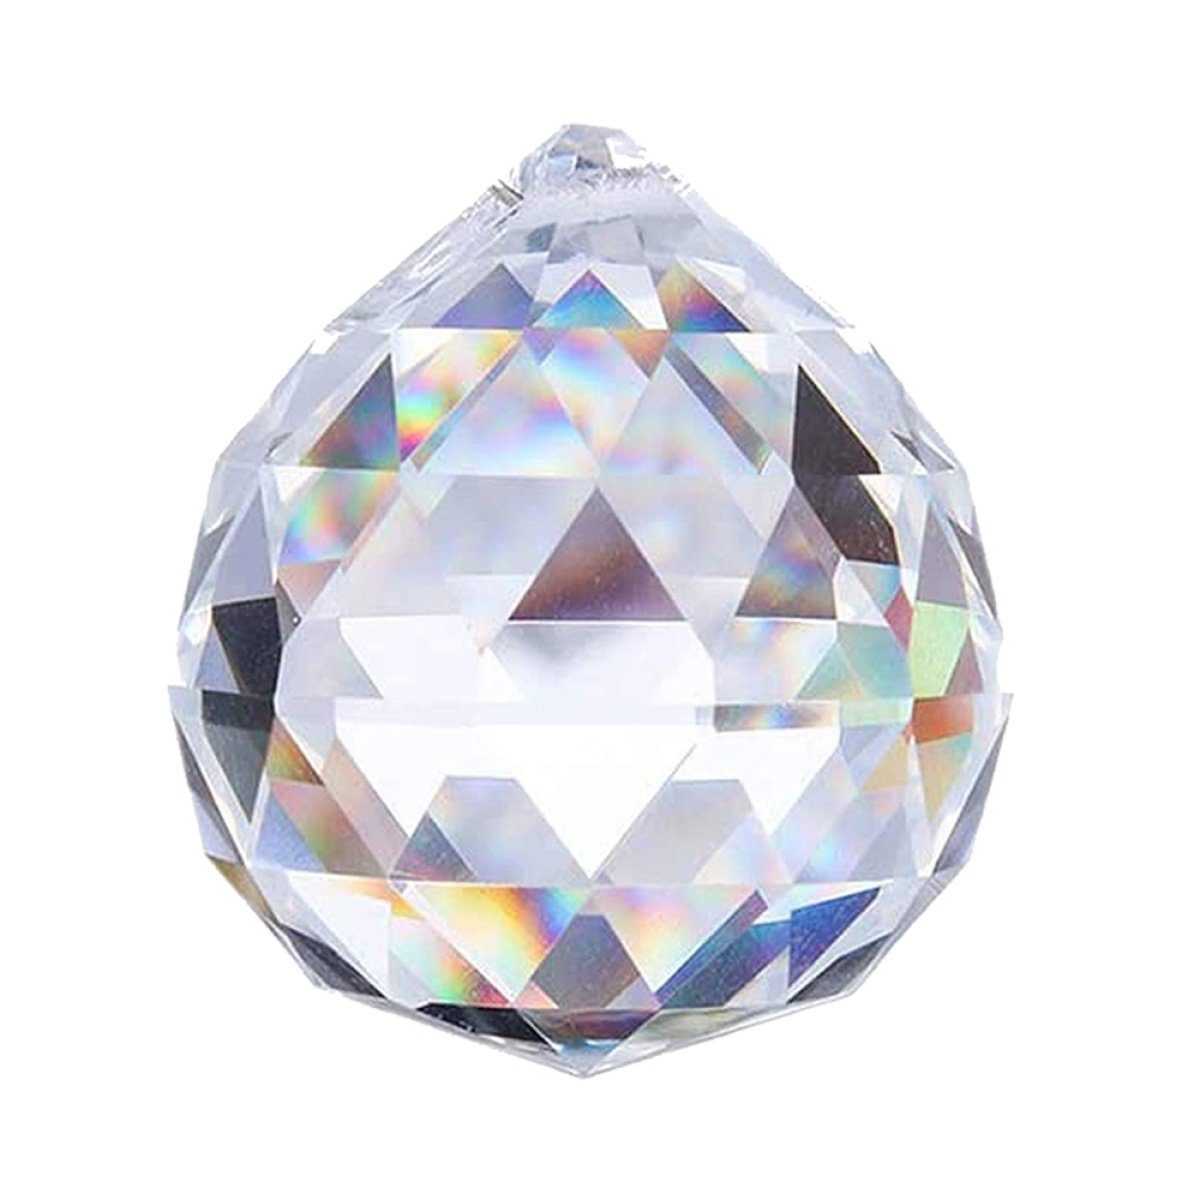 Questive Feng-Shui Lampe Hängedekoration Kugel hängend Kristall Klarglas Prisma